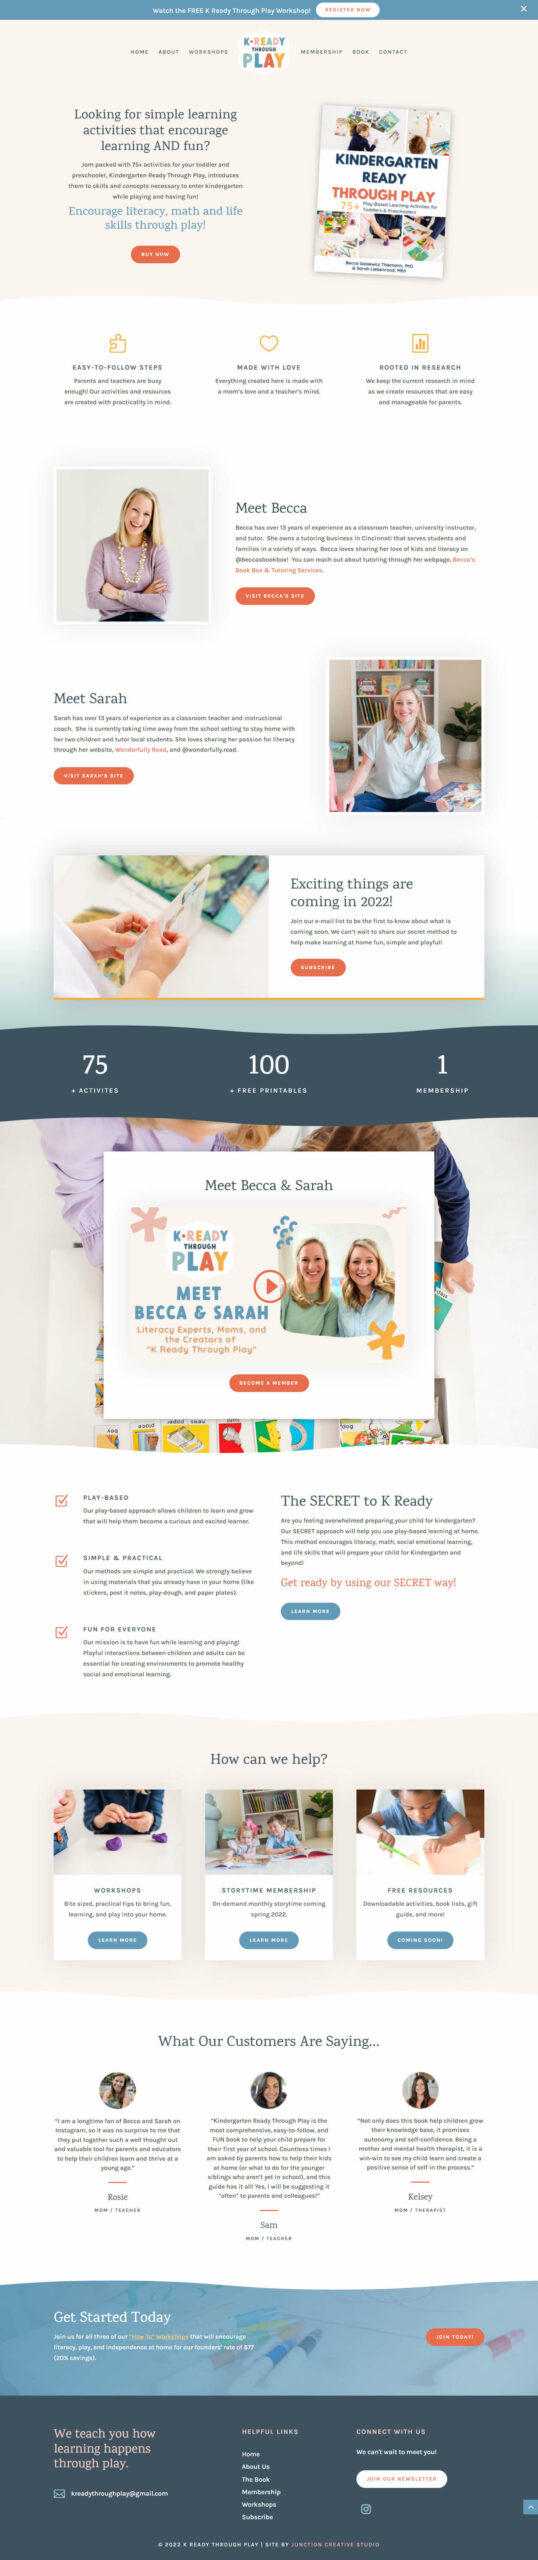 K Ready Through Play Website Design by Junction Creative Studio